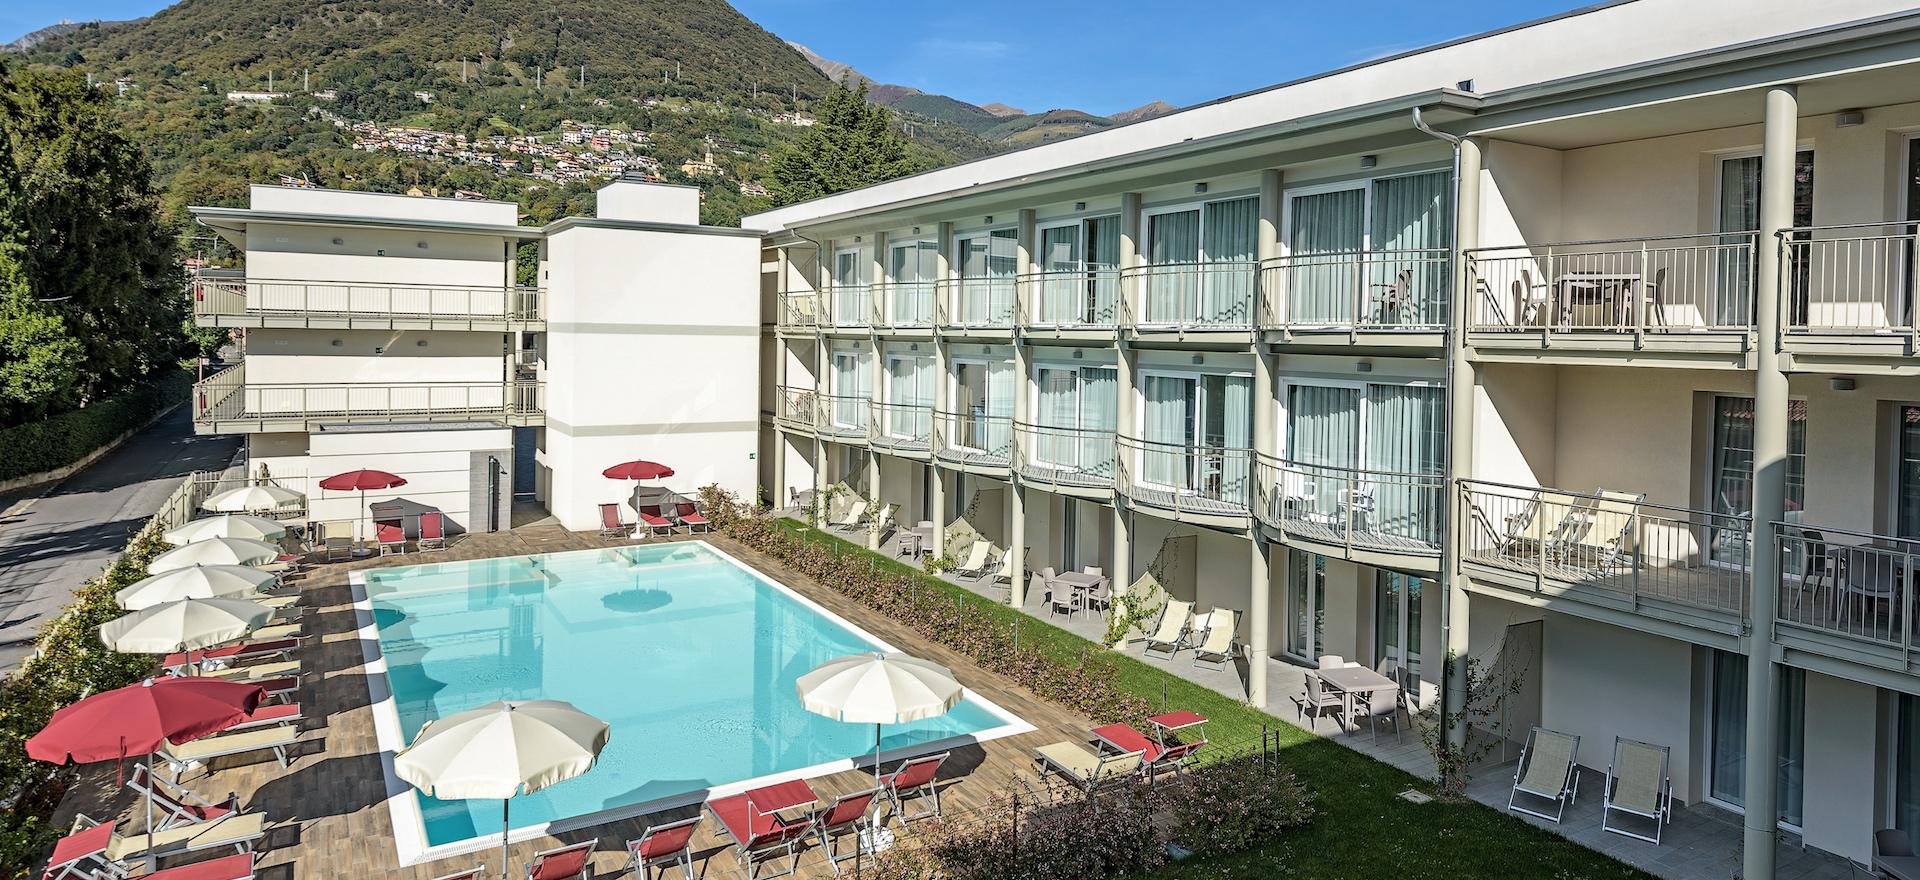 Agriturismo Lake Como and Lake Garda Hotel near the pebble beaches of Lake Como